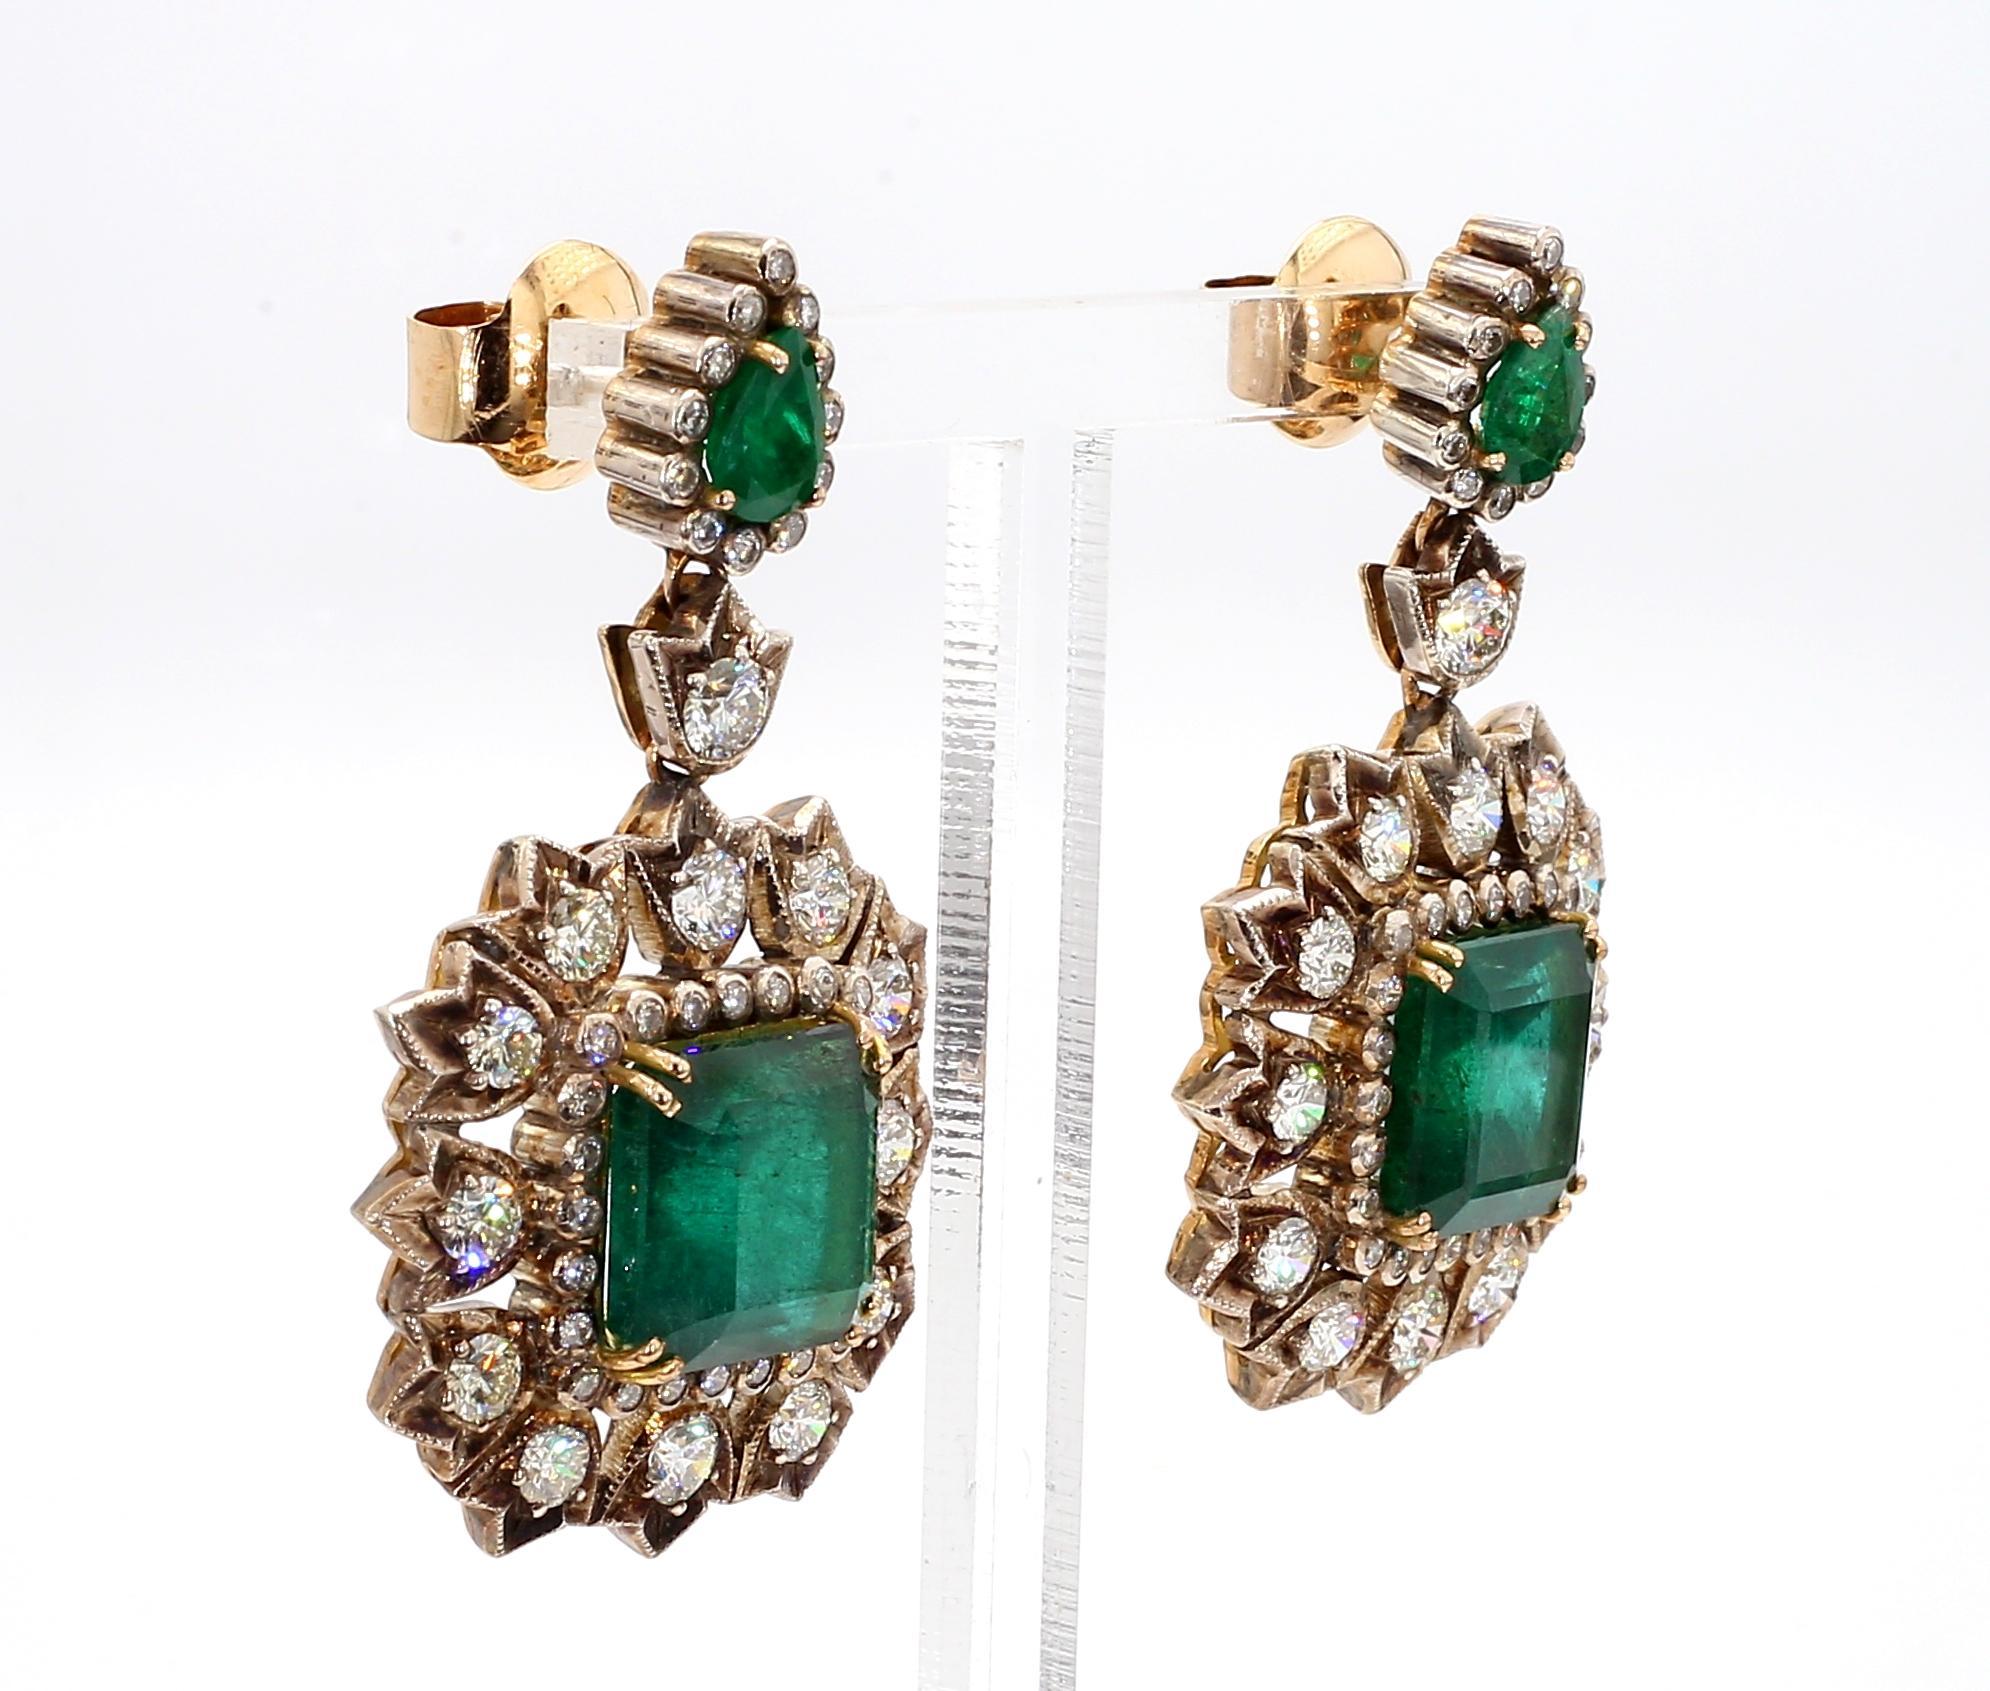 The York - 16.1 Carat Zambian Emerald and 5.4 Carat Diamond Earrings 18K Gold For Sale 4